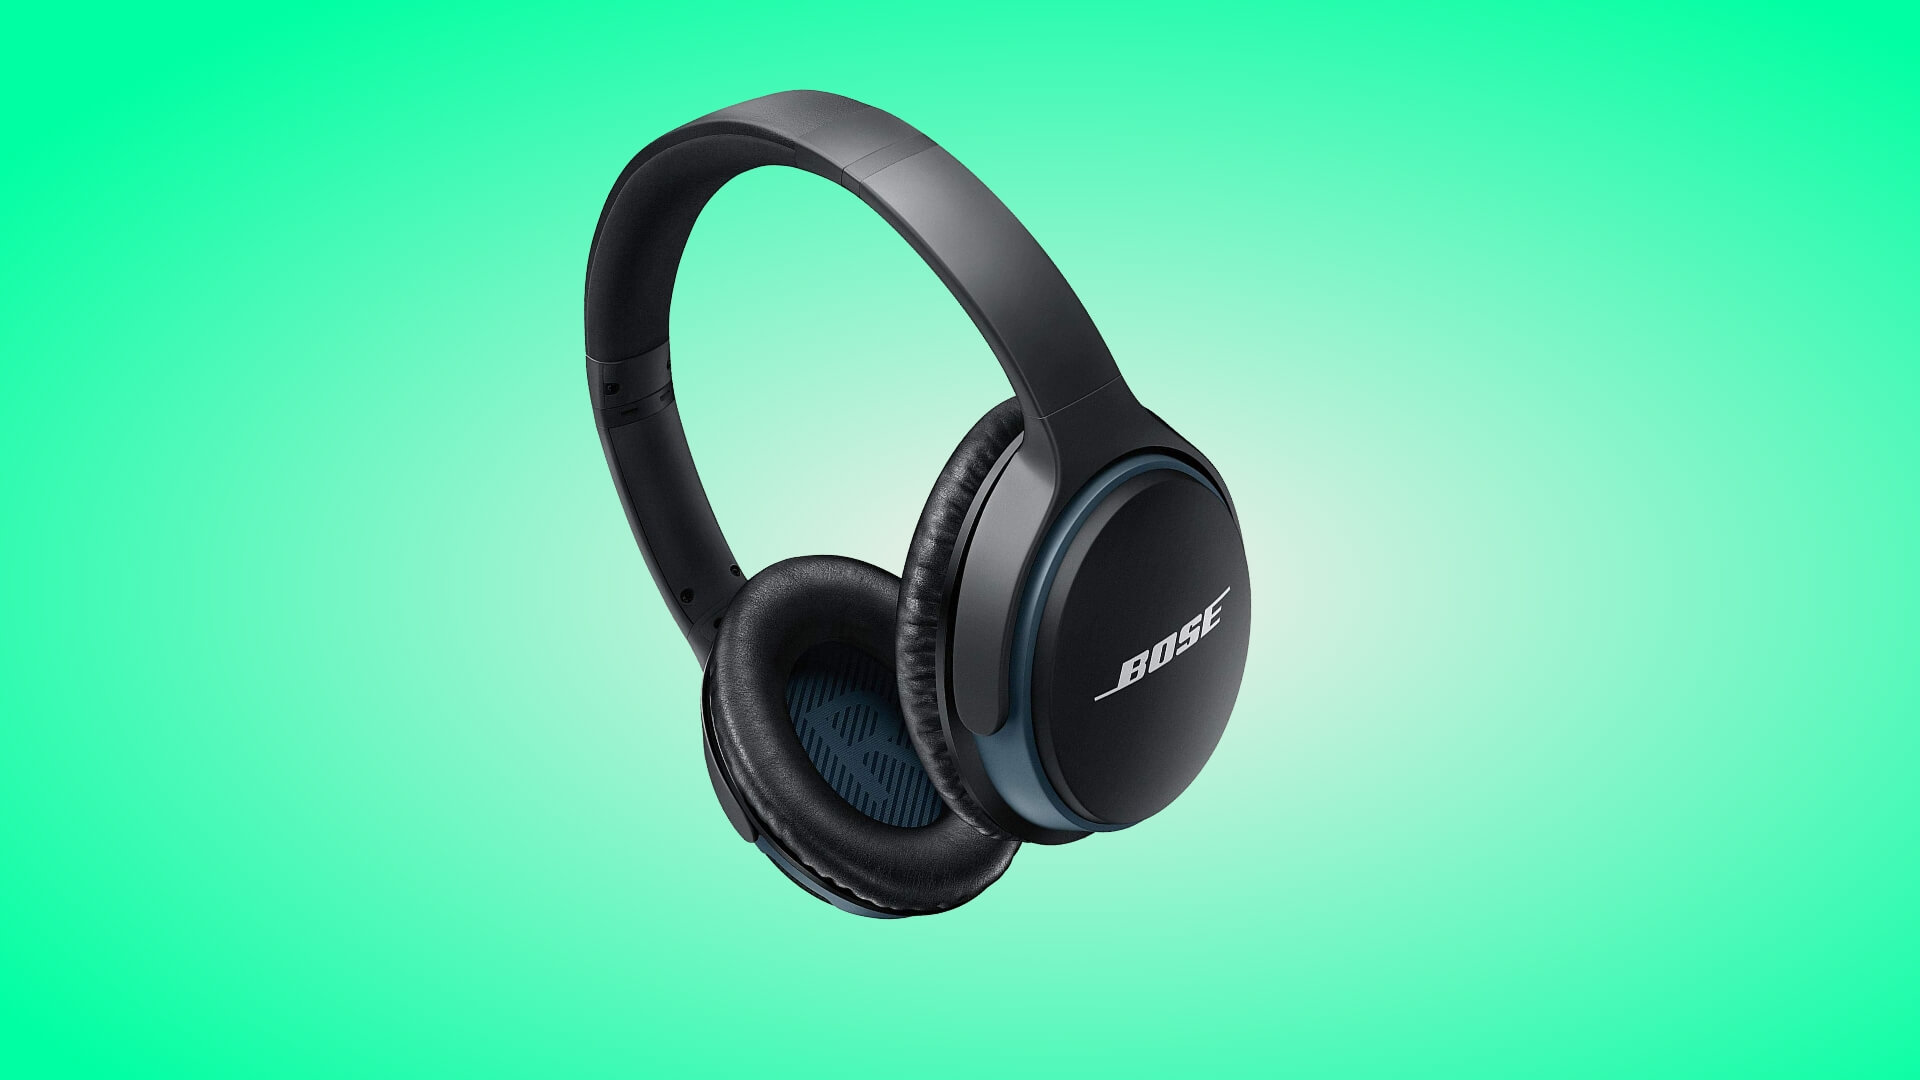 Bose SoundLink II Wireless Headphones